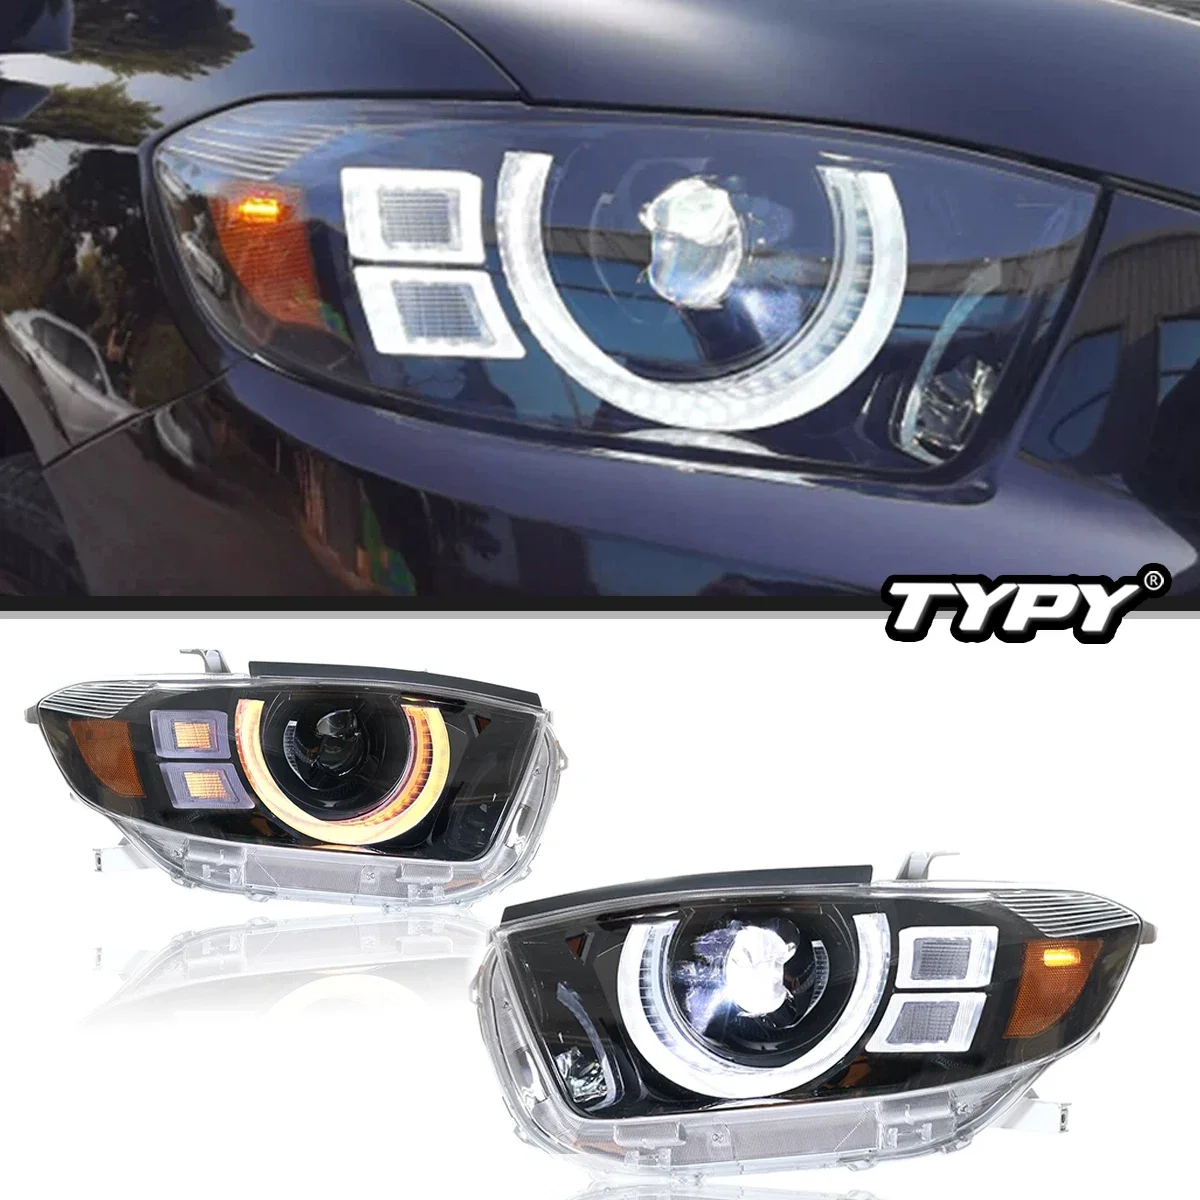 

TYPY Car Headlights For Toyota Highlander 2009-2011 LED Car Lamps Daytime Running Lights Dynamic Turn Signals